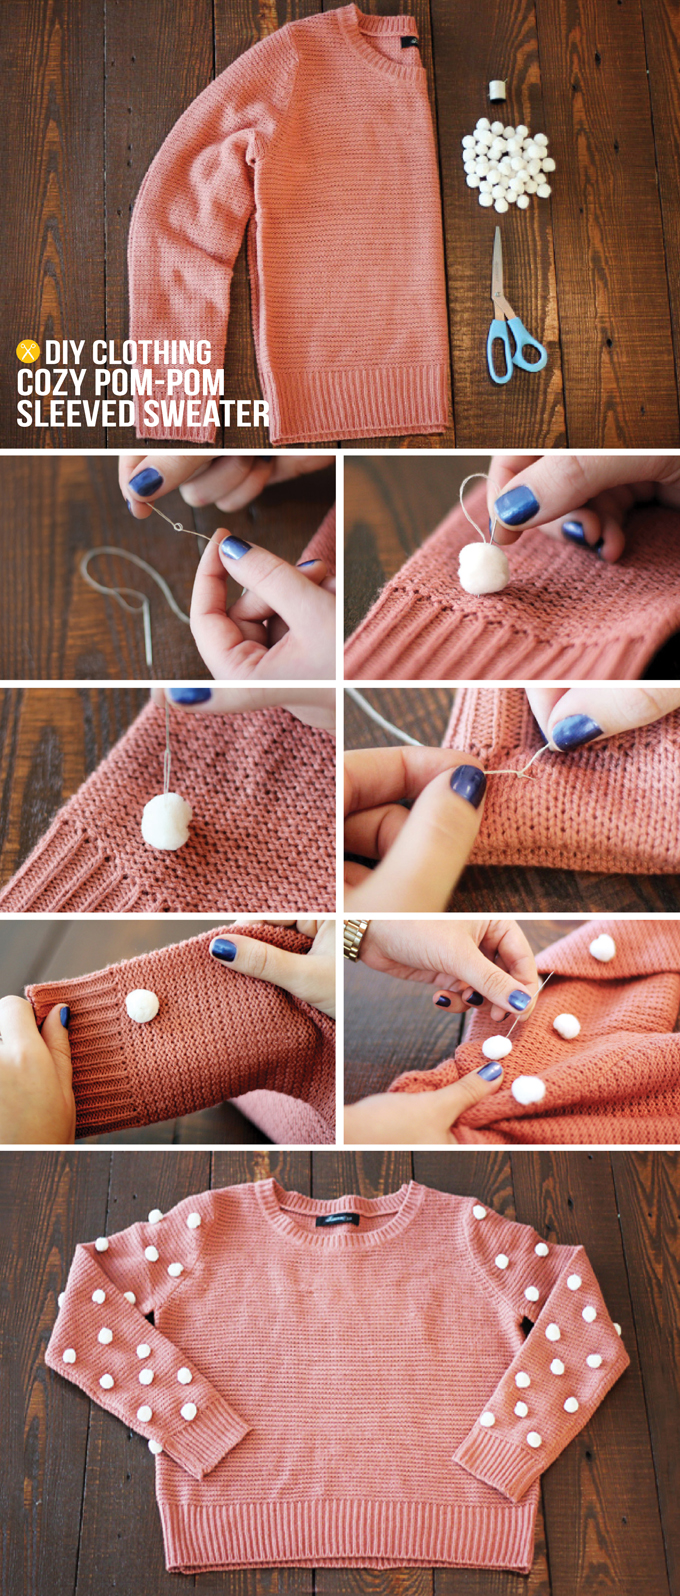 How to Make Pom-Poms - Positively Splendid {Crafts, Sewing